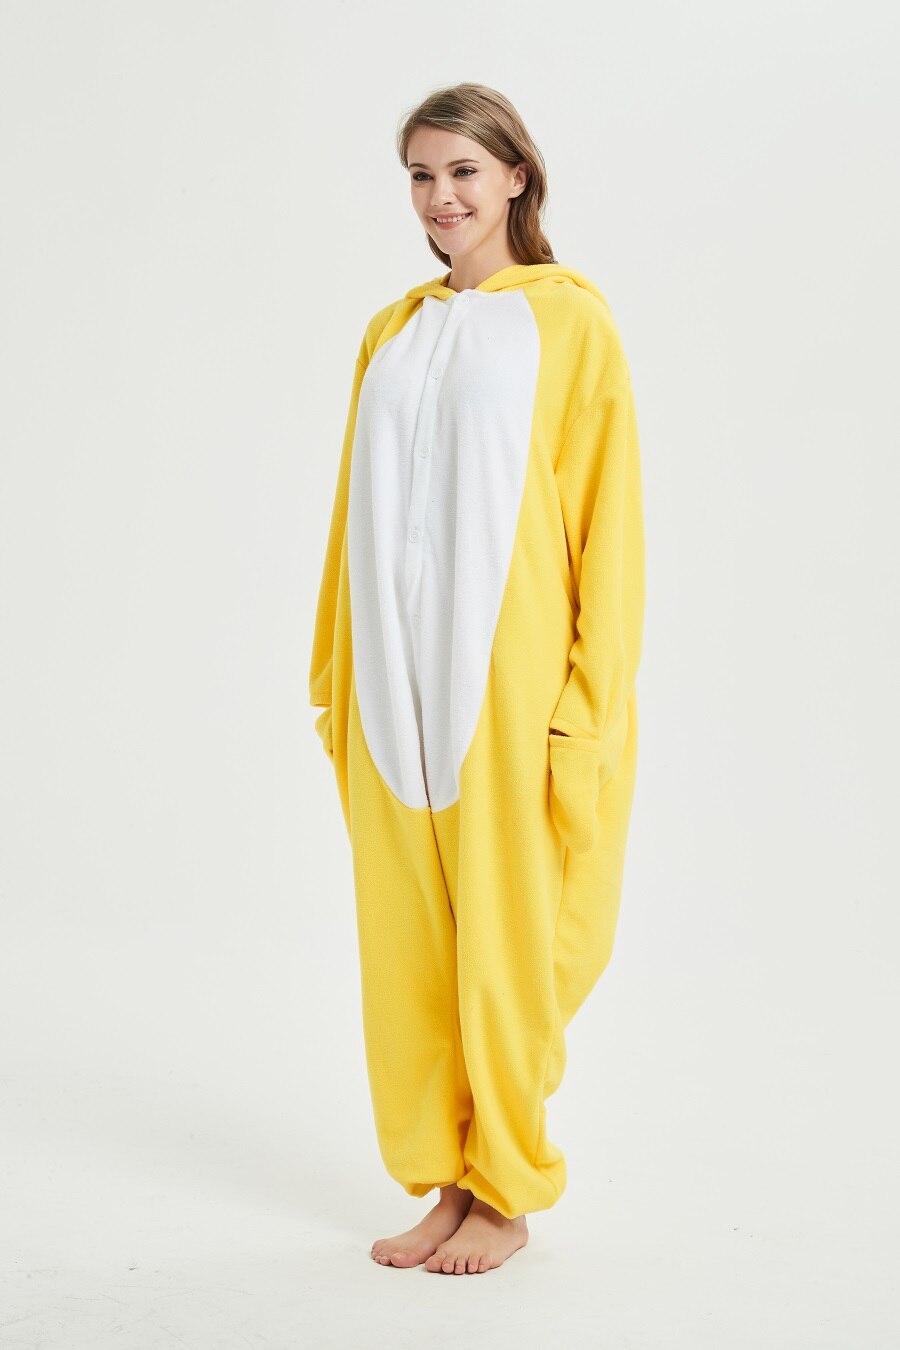 Unisex Duck Kigurumis Women Onesies Adult Winter Pajama Funny Jumpsuit Polar Fleece Animal Cartoon Overalls Halloween Suit